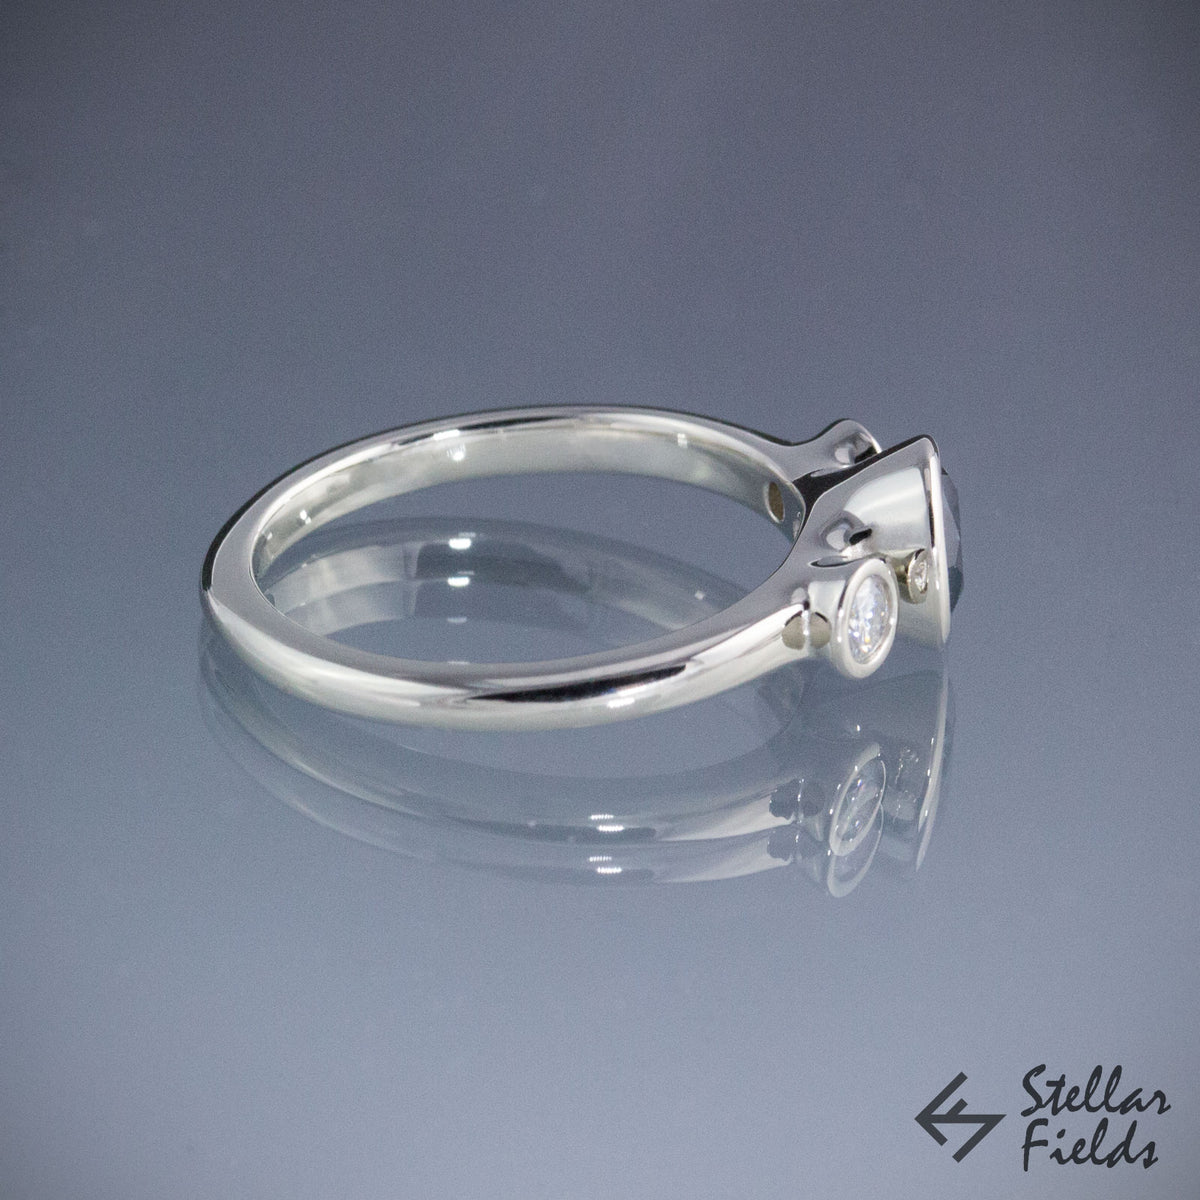 Teal Montana Sapphire with Diamonds Bezel Engagement Ring Three Stone Ring 18k White Gold Platinum Stellar Fields Jewelry